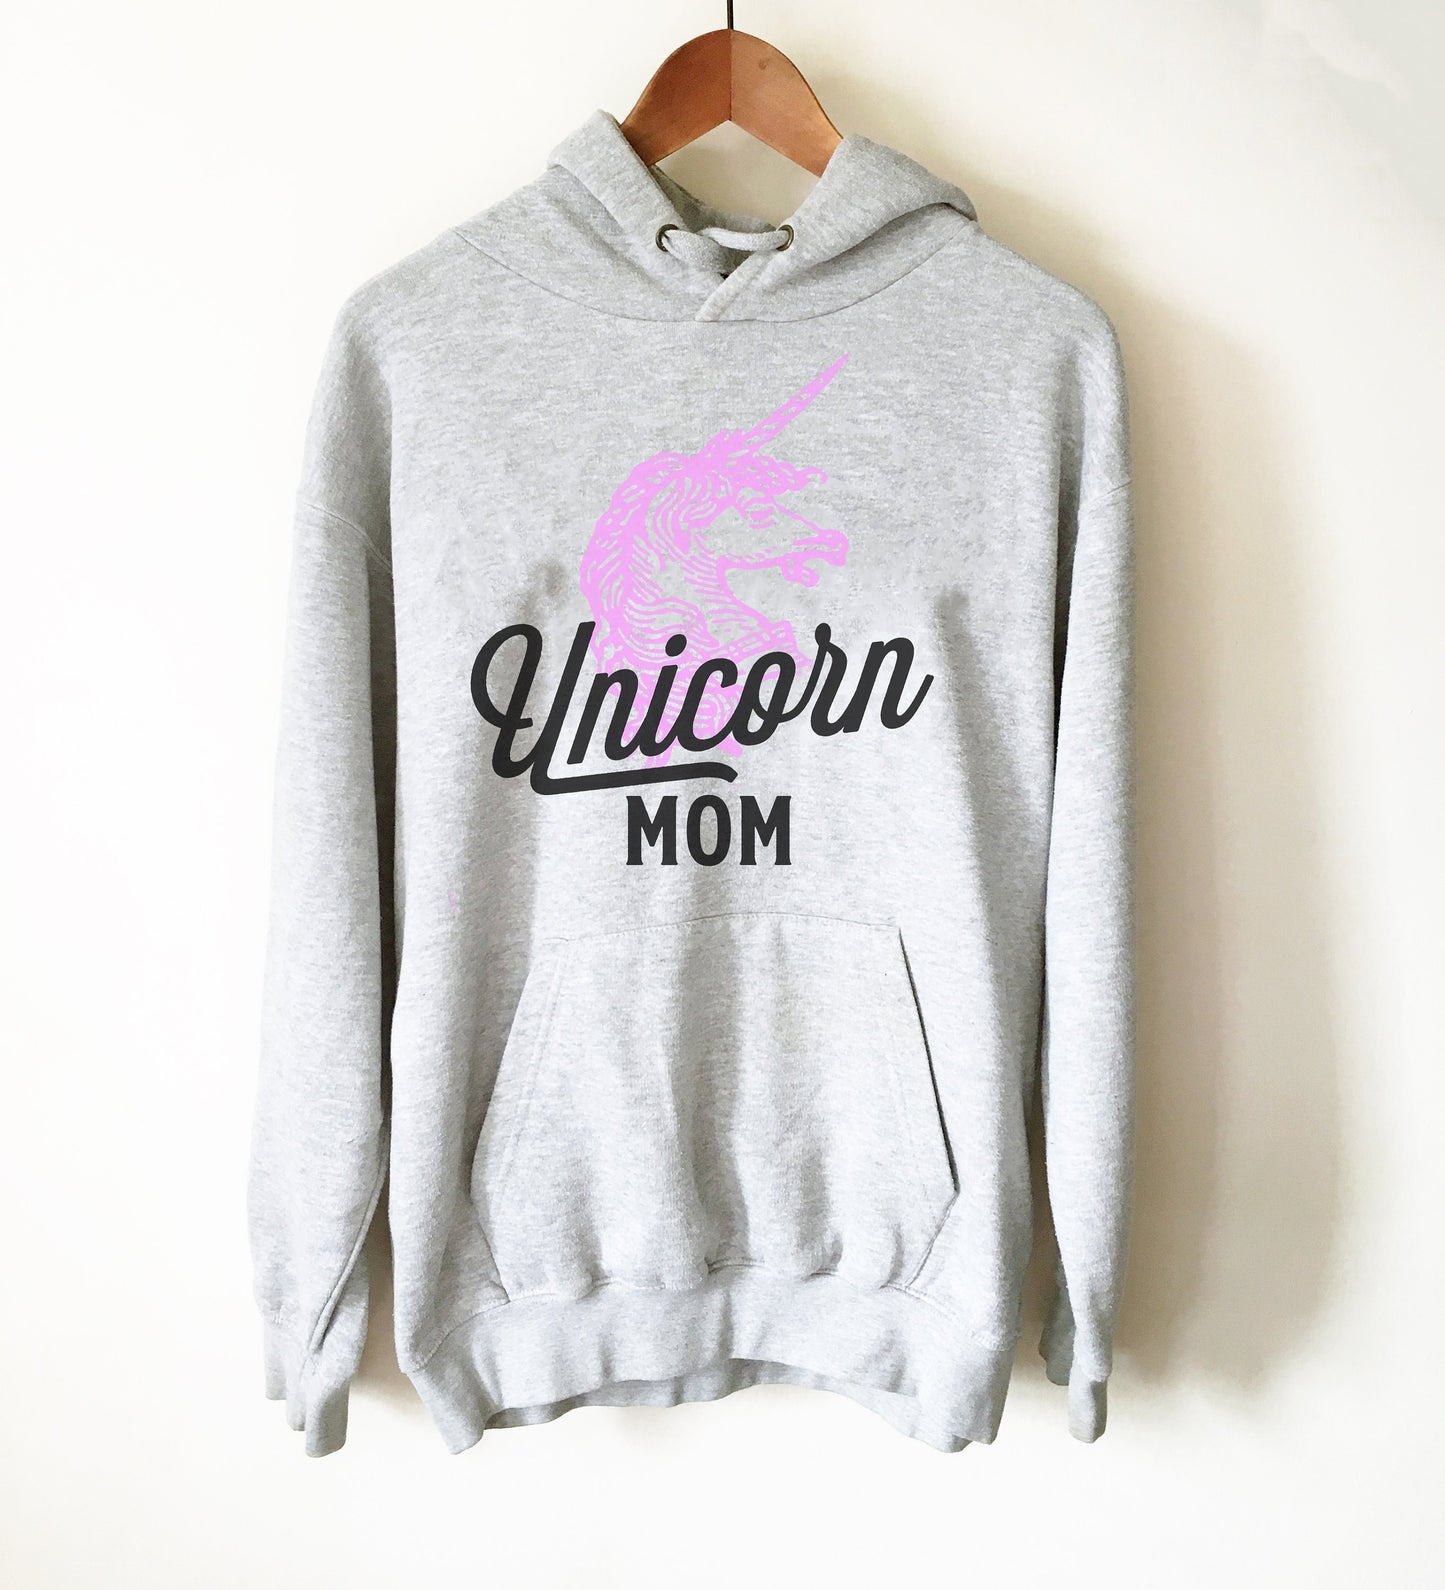 Unicorn Mom Hoodie - Unicorn T Shirt, Unicorn Gift, Unicorn Birthday, Unicorn Party, Mom Shirt, Mom Gift, Gift For Mom, Mothers Day